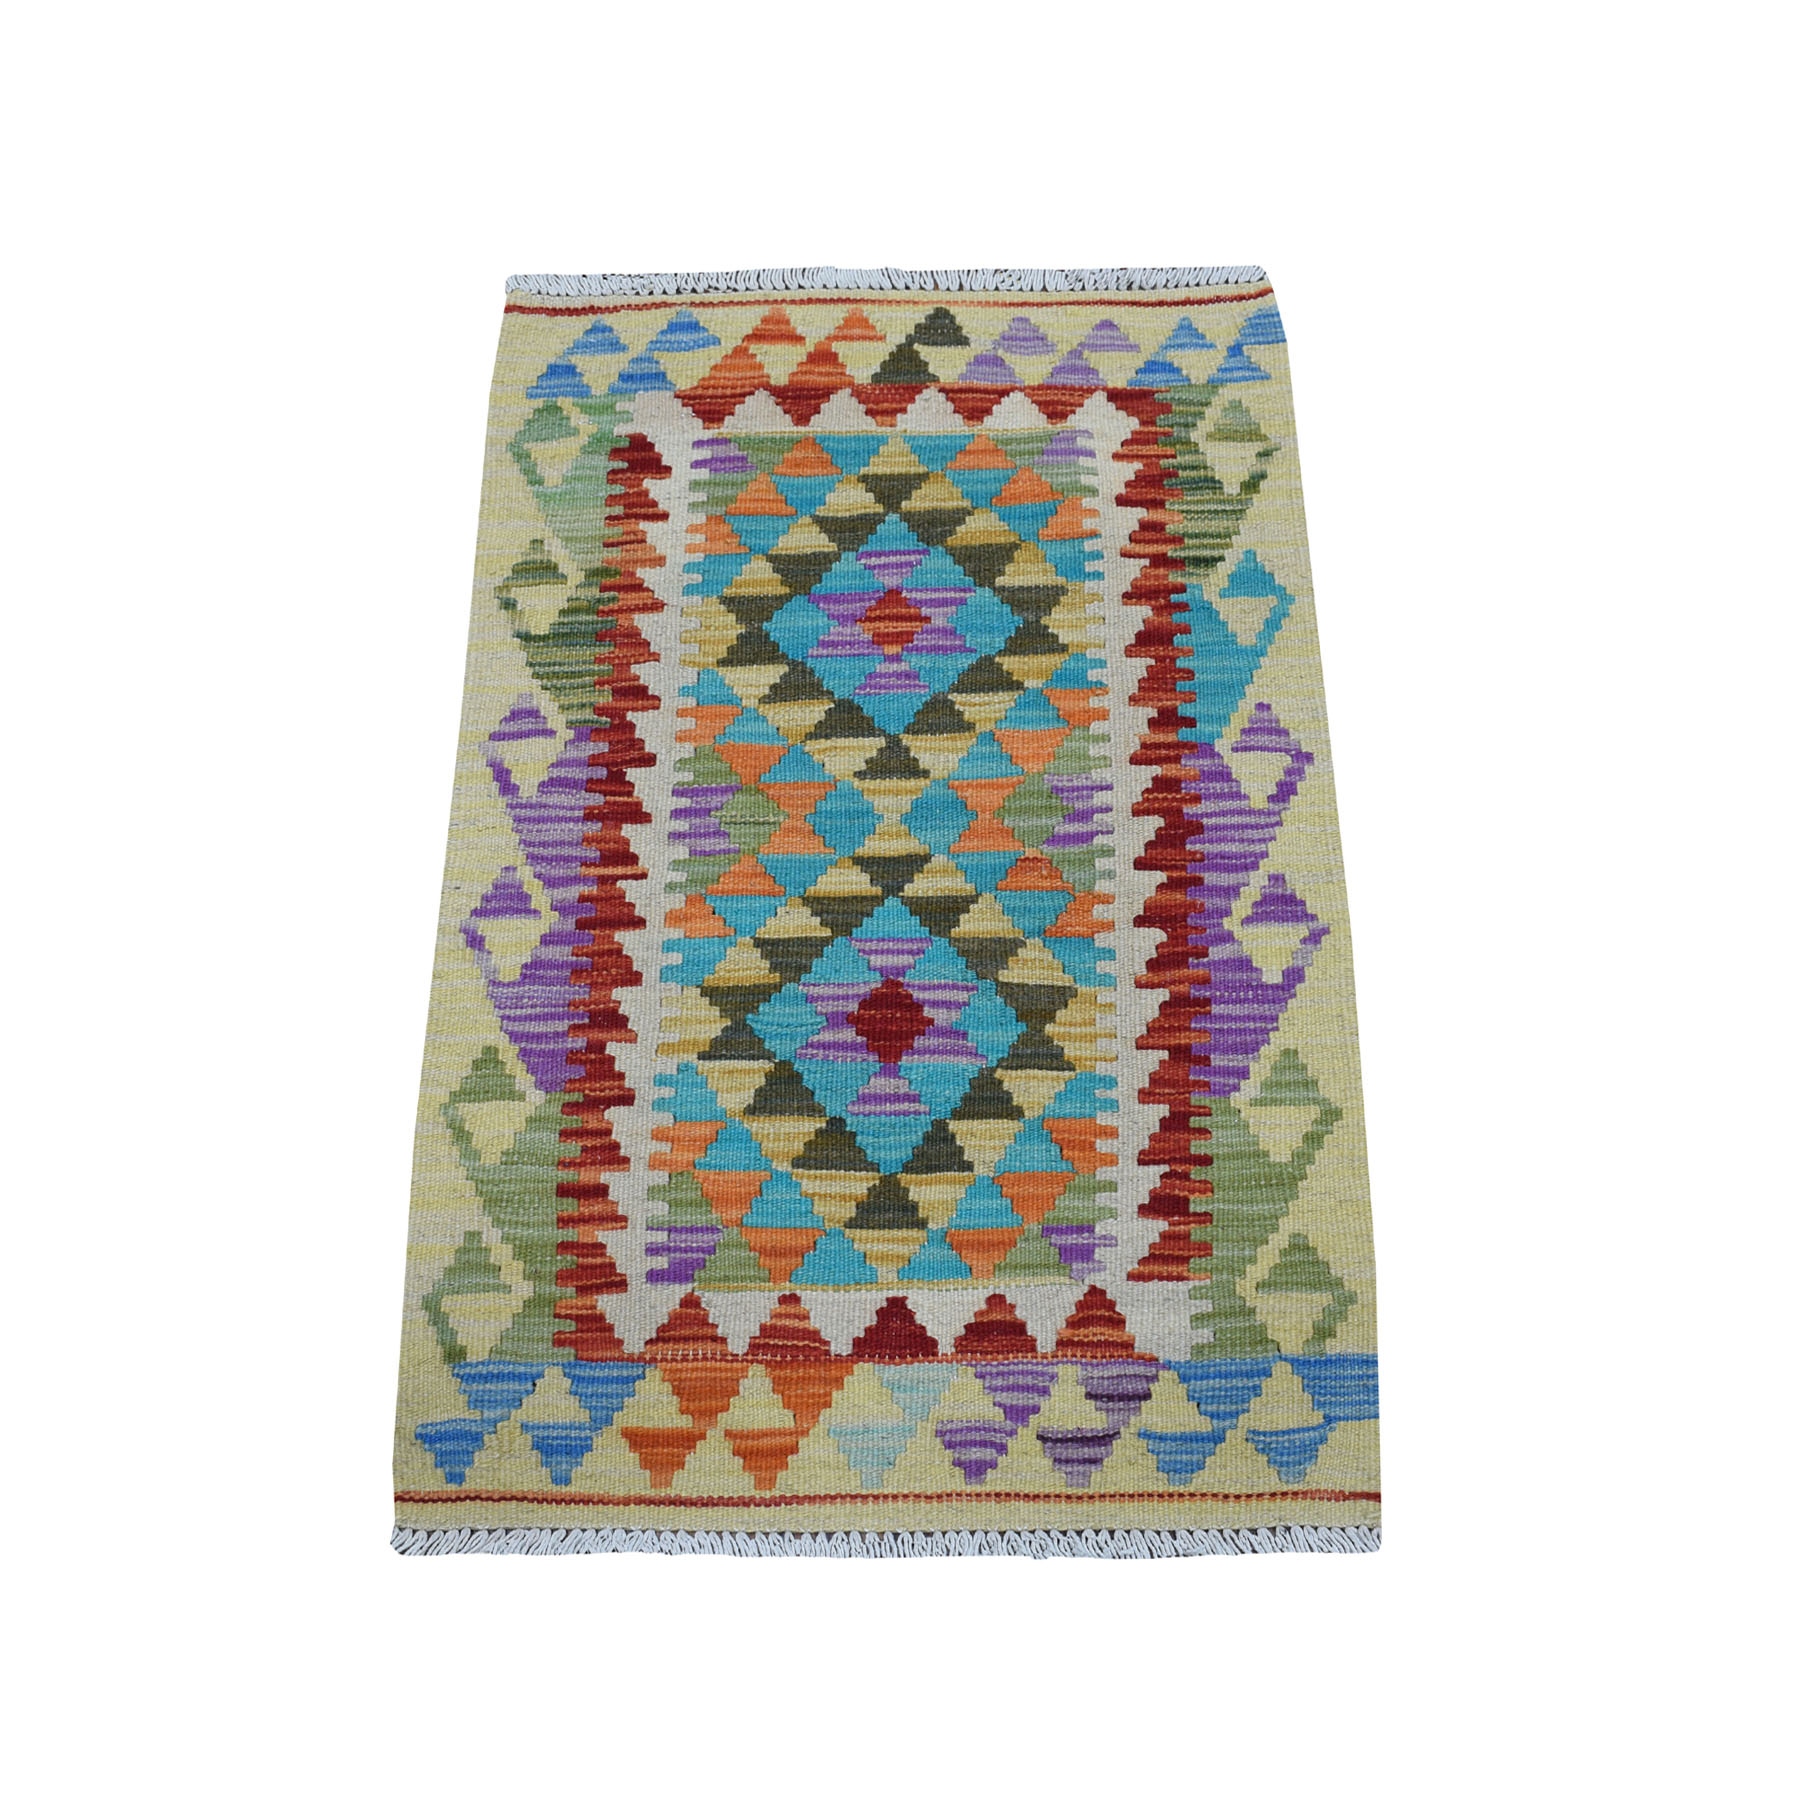 2'x2'10" Colorful Afghan Kilim Pure Wool Hand Woven Oriental Rug  